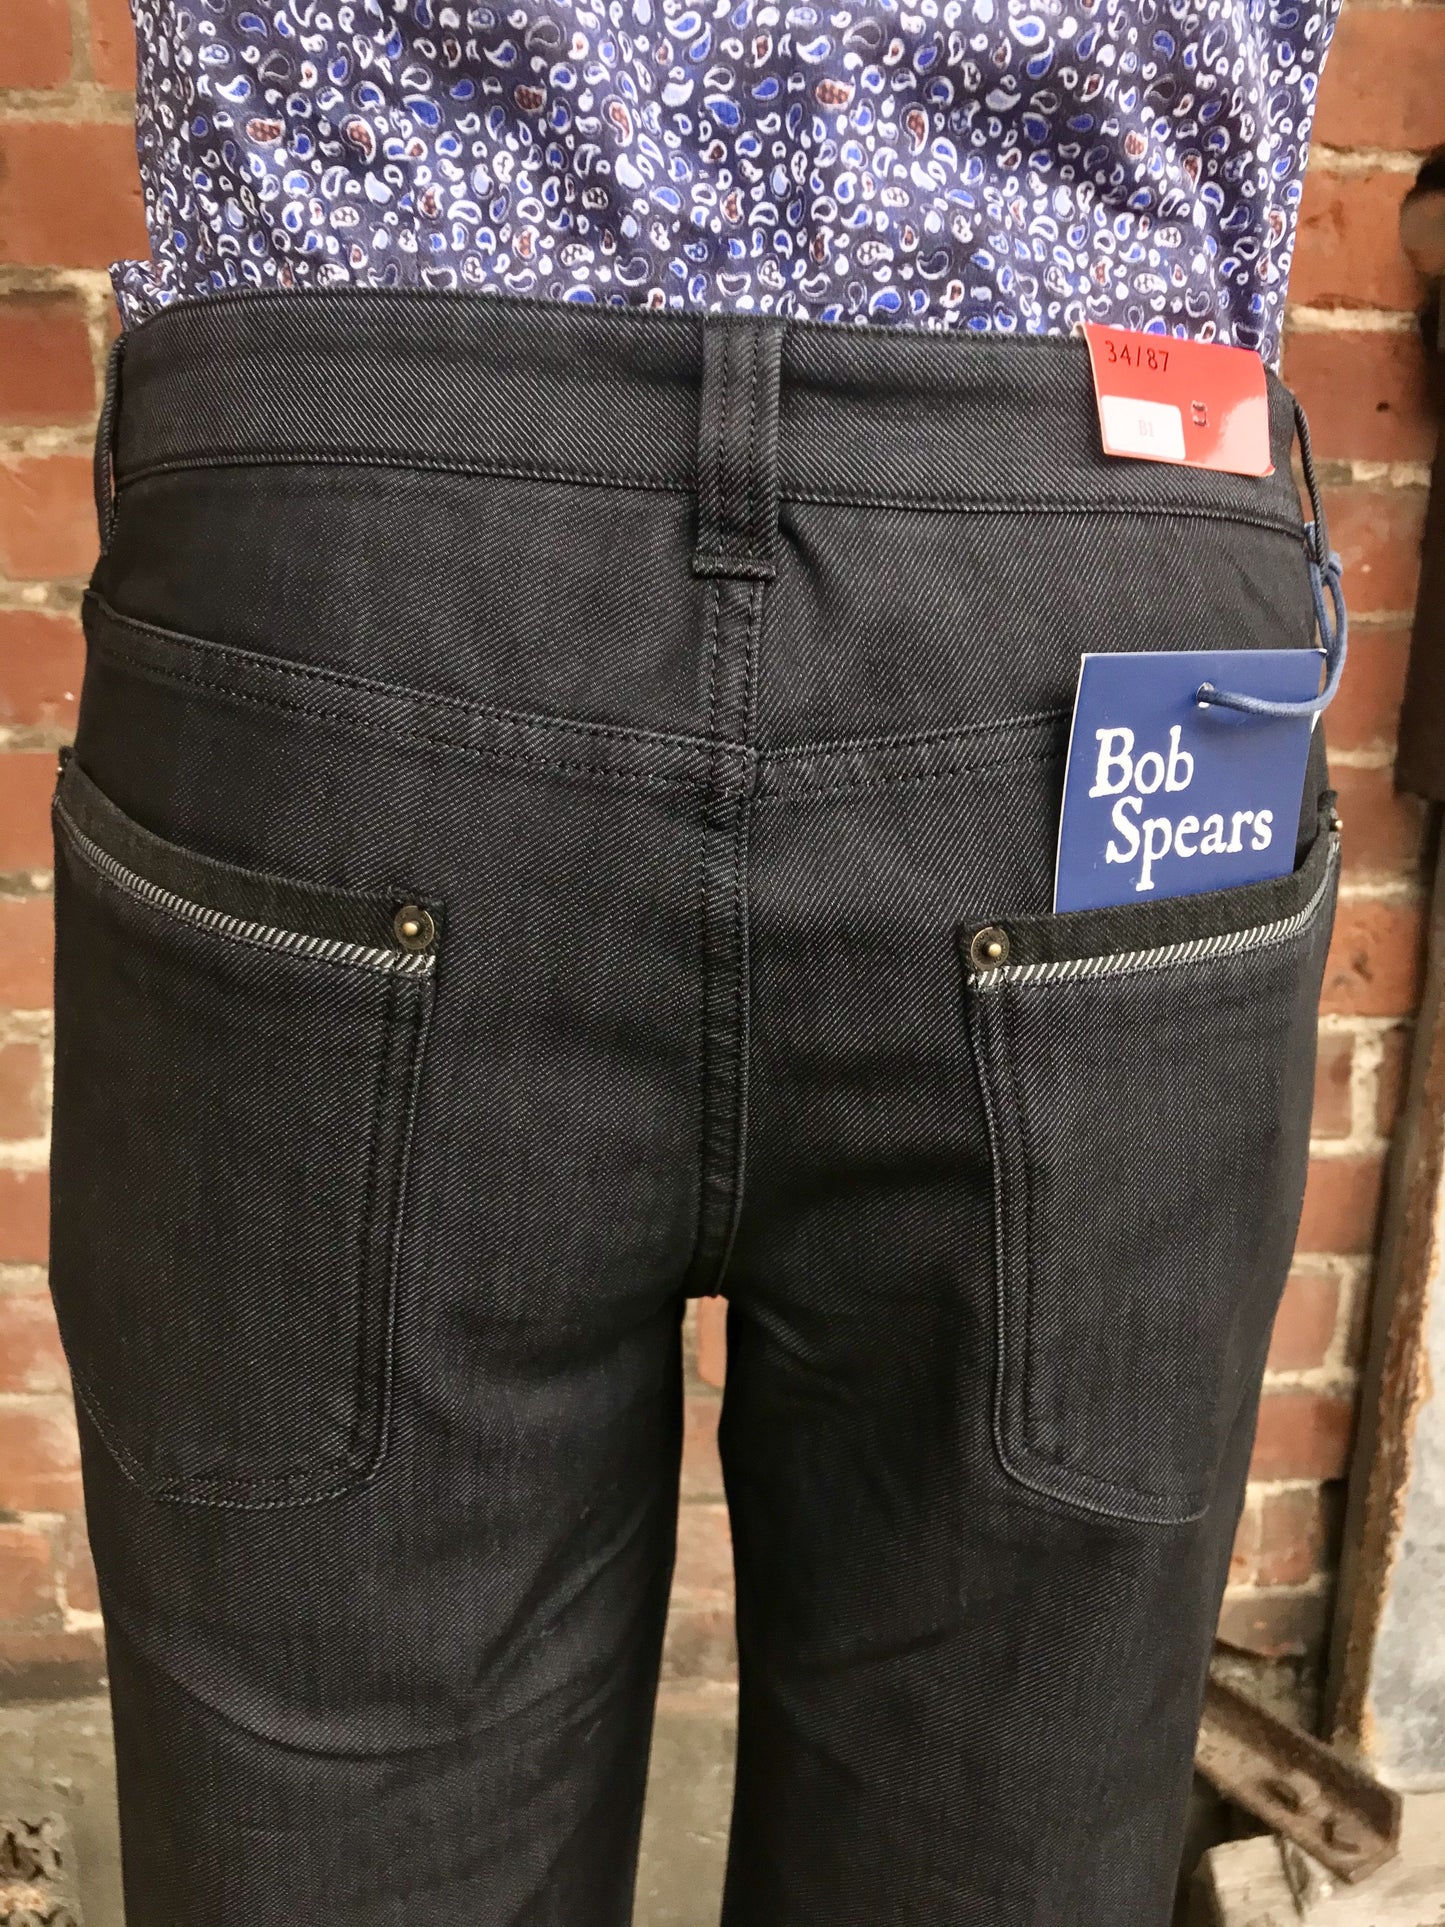 Bob Spears Jeans - B1 Charcoal Denim